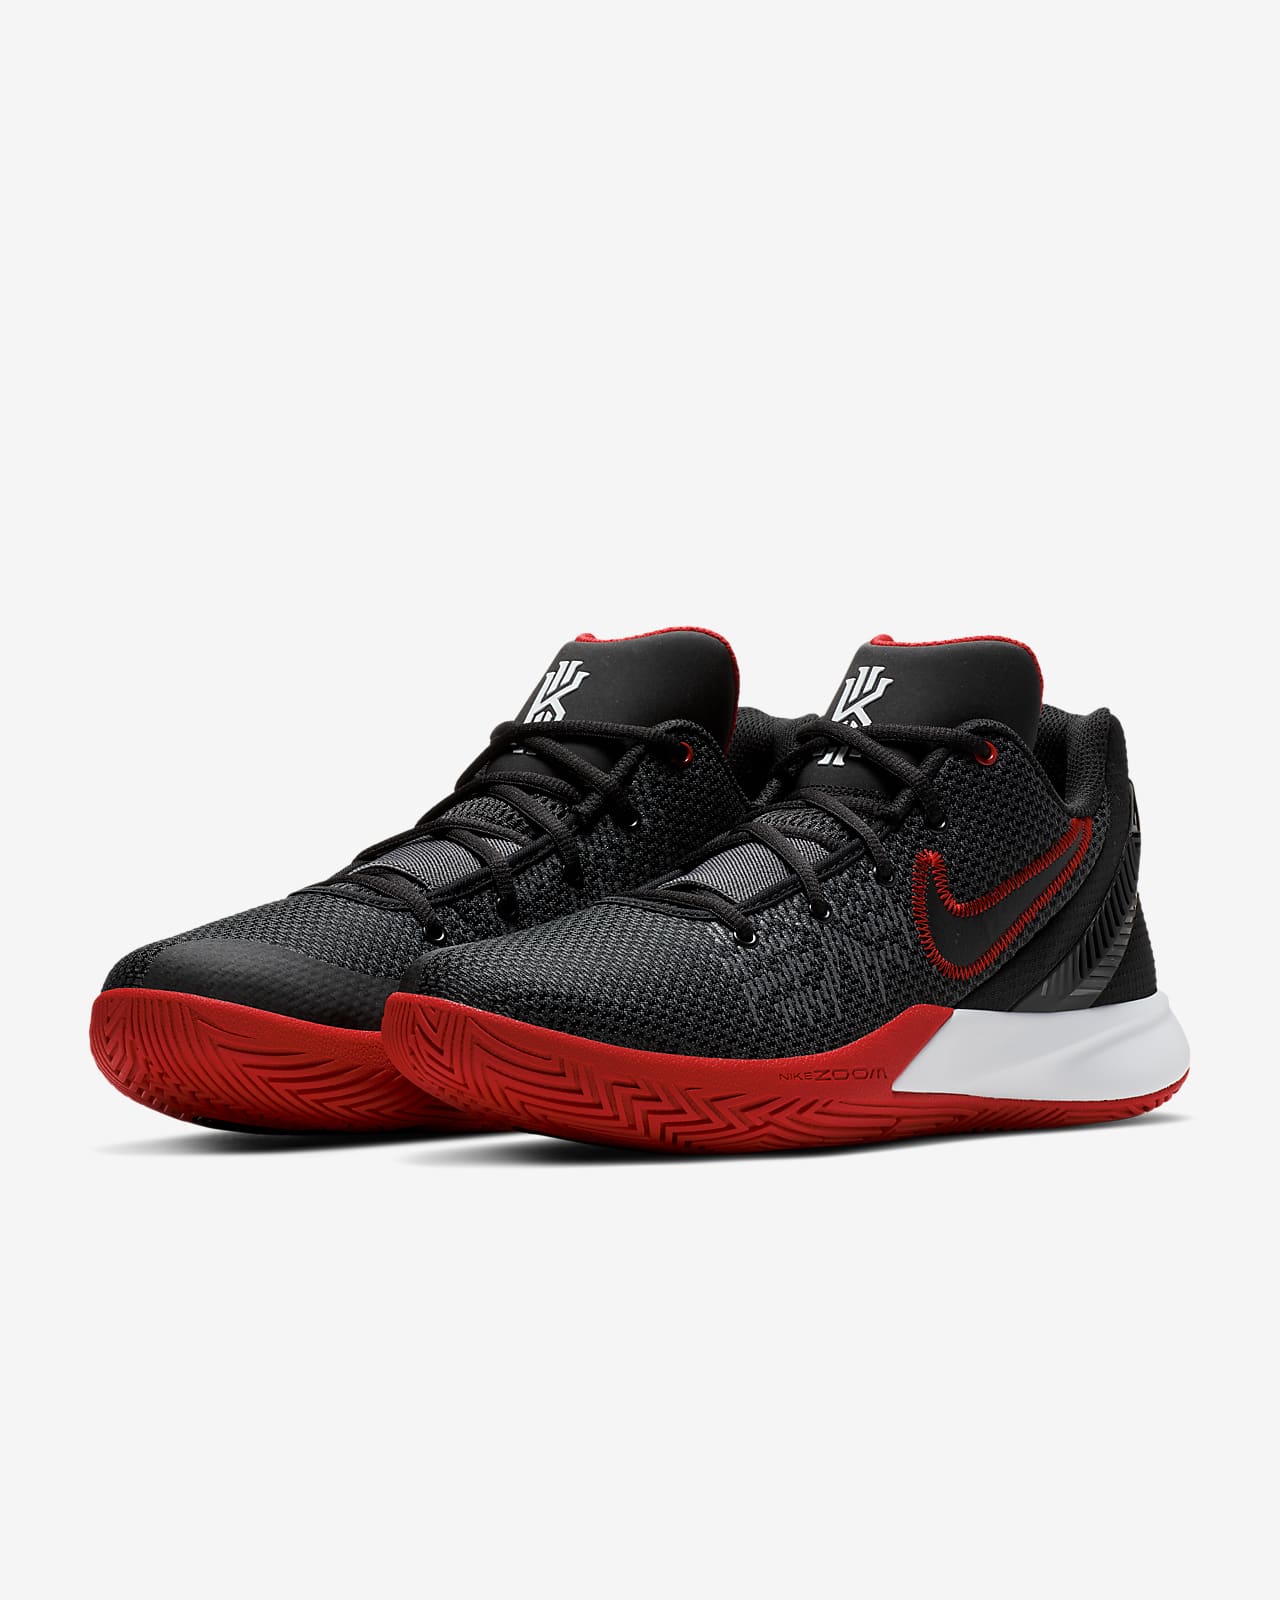 Kyrie Flytrap II Basketball Shoe. Nike LU